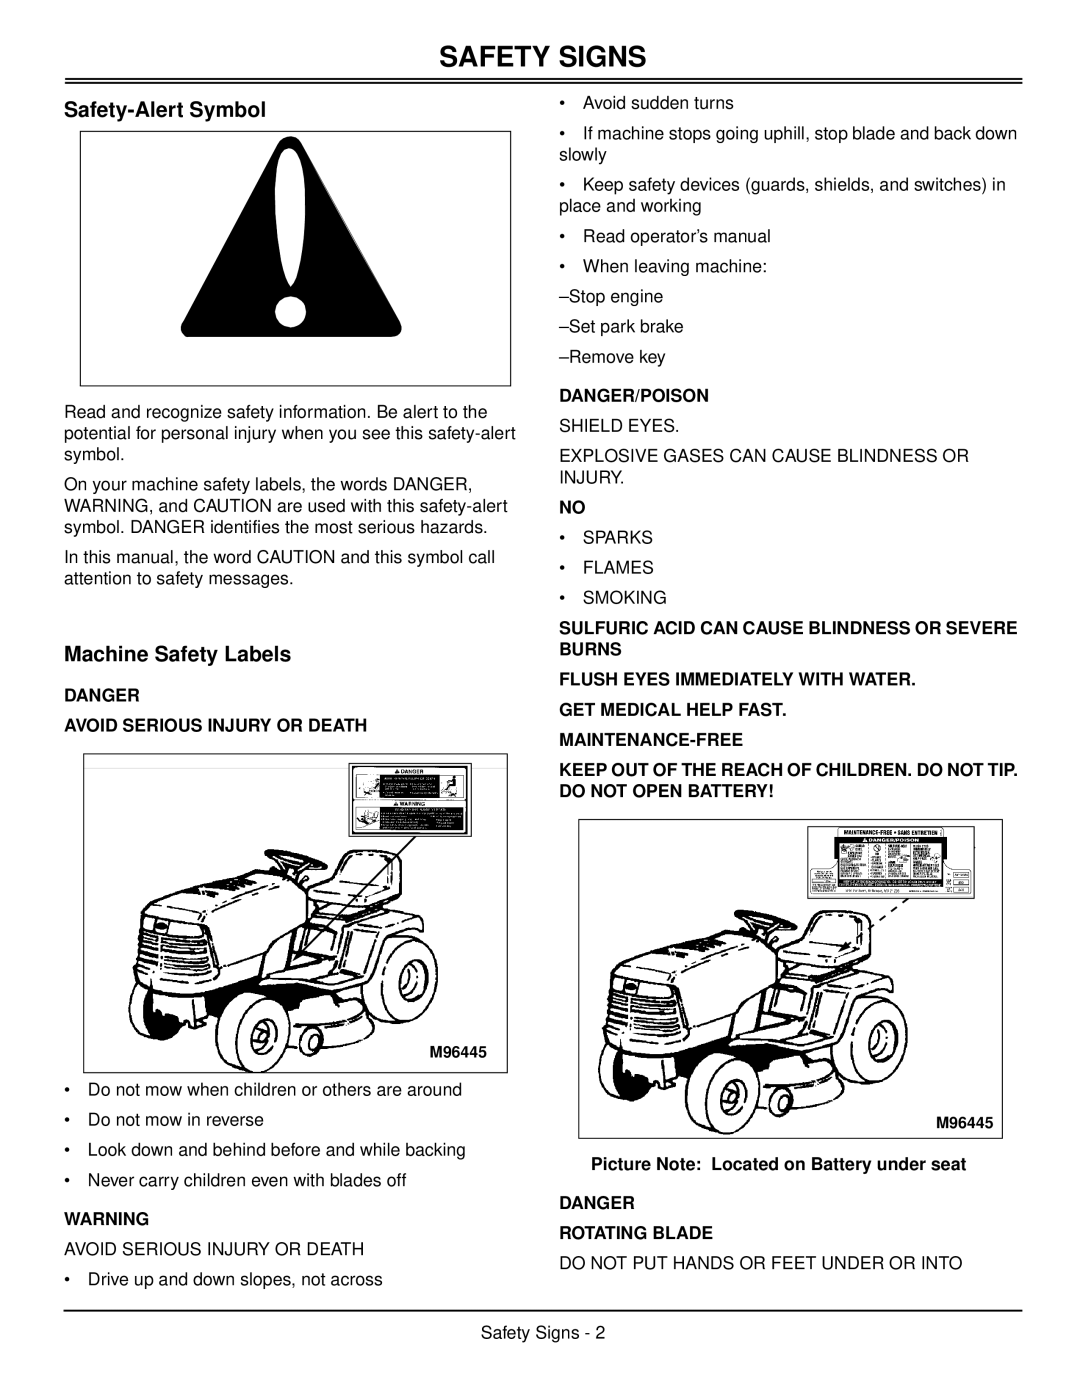 Scotts S1642, S1742, S2046 manual Safety Signs, Safety-Alert Symbol, Machine Safety Labels 